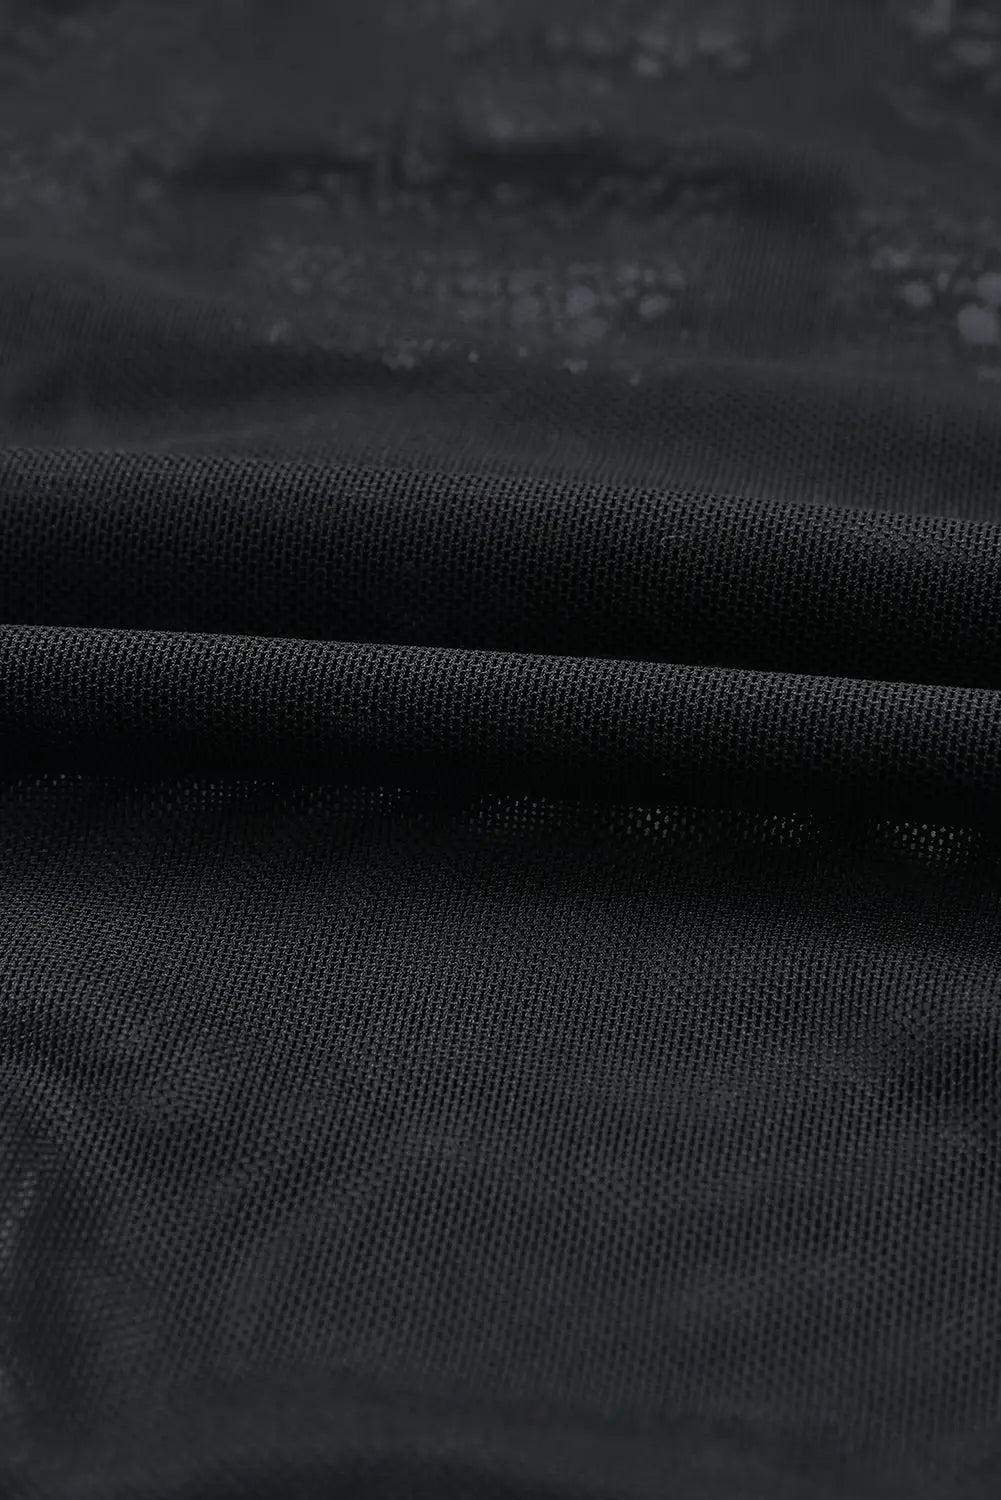 Black spaghetti straps lace panel bodysuit - bodysuits